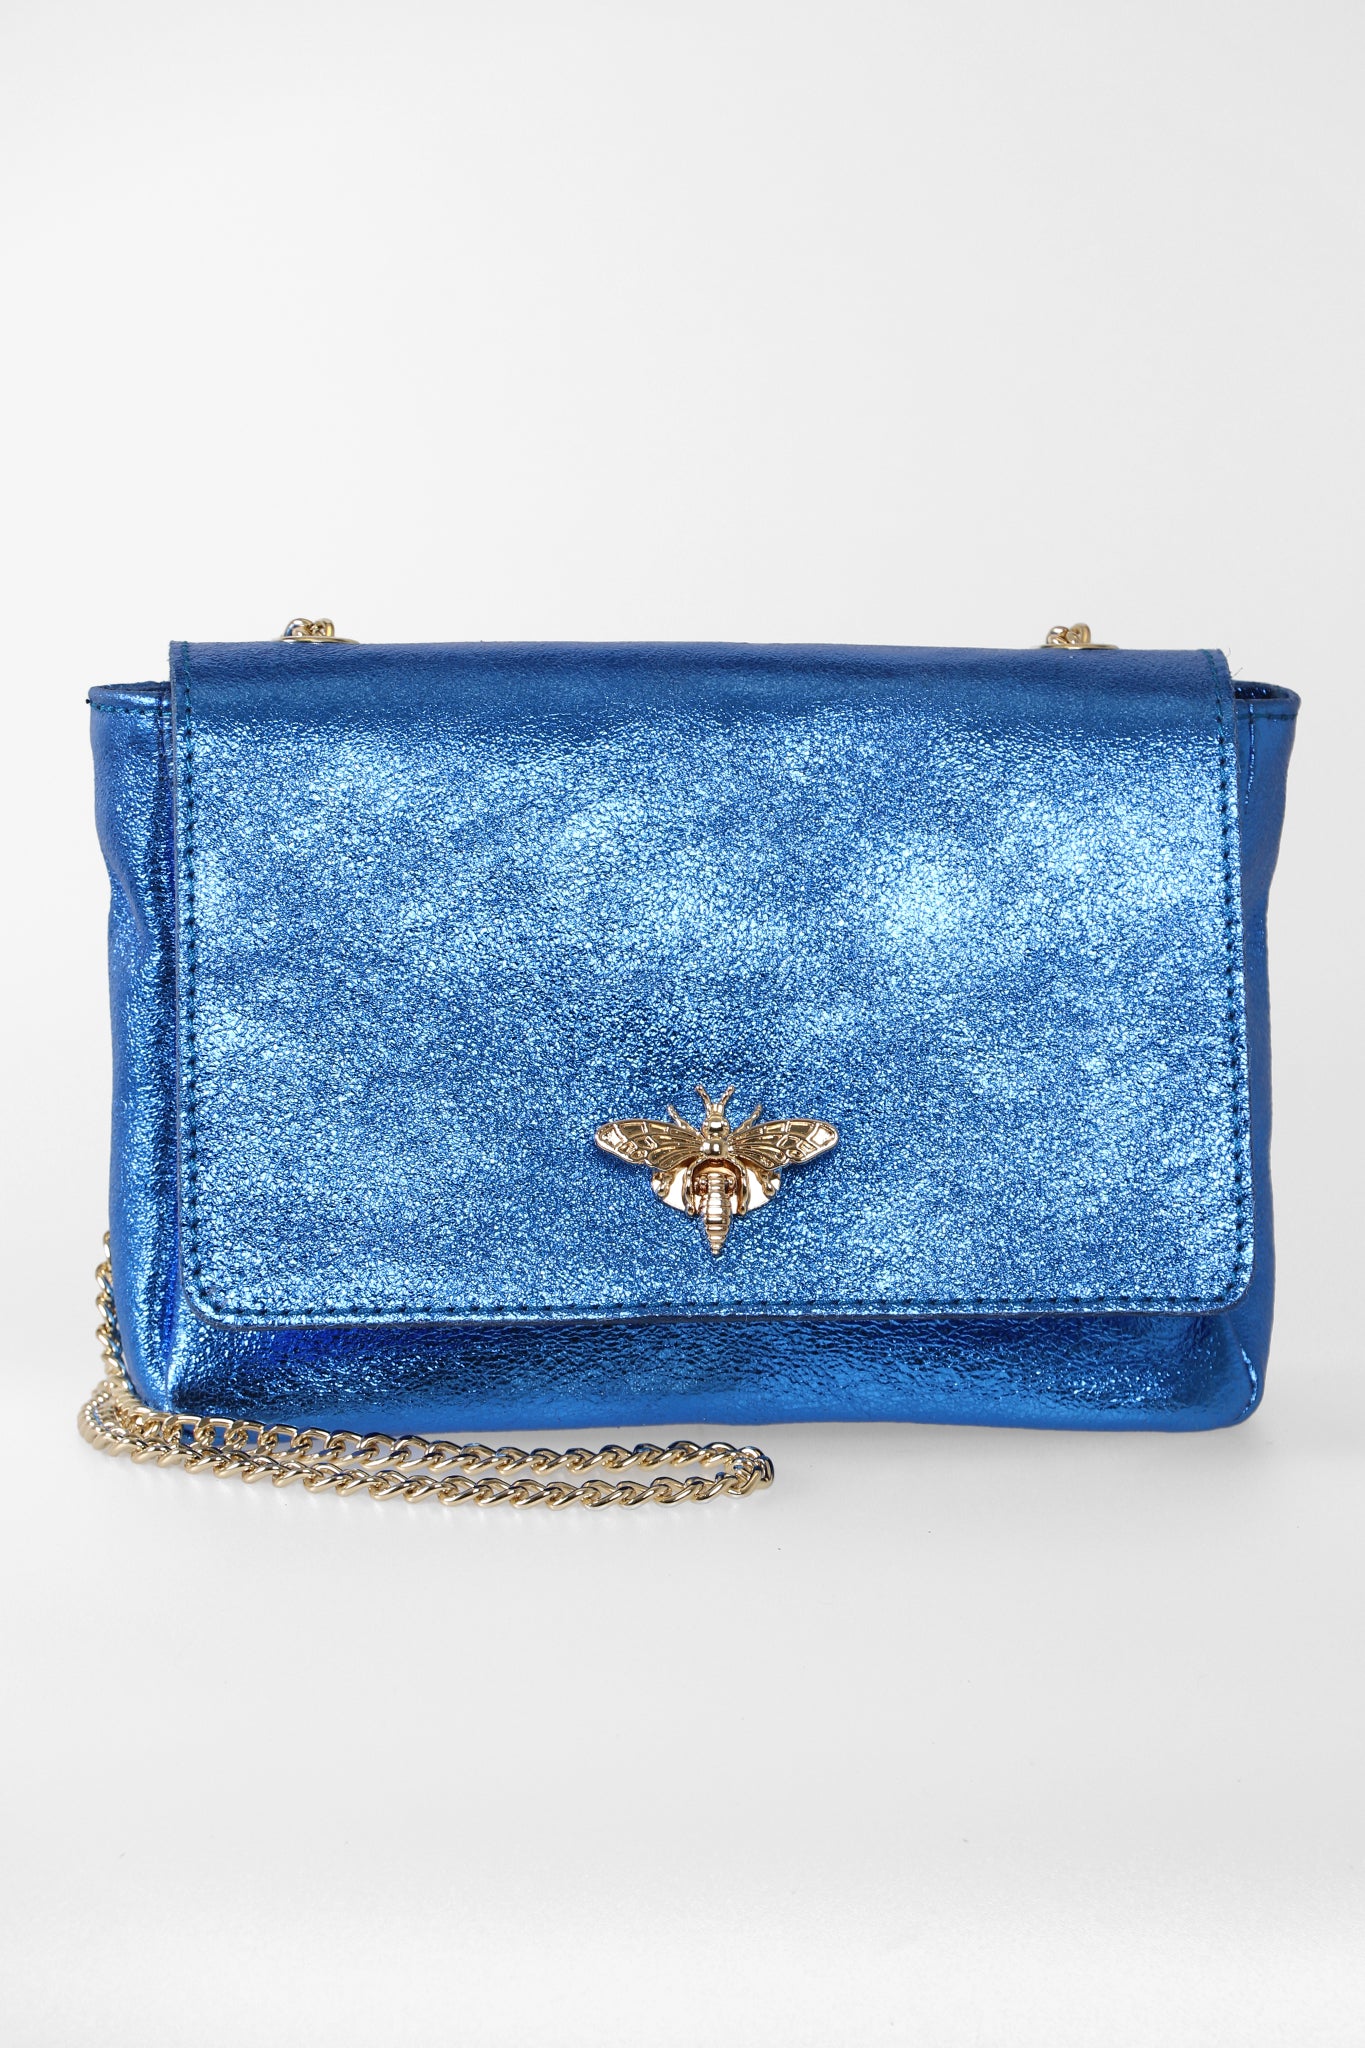 Royal Blue Suede Leather Clutch Purse, Blue Leather Bag, Leather Envelope  Clutch, Blue Clutch Bag, Blue Leather Handbag, Leather Evening Bag - Etsy